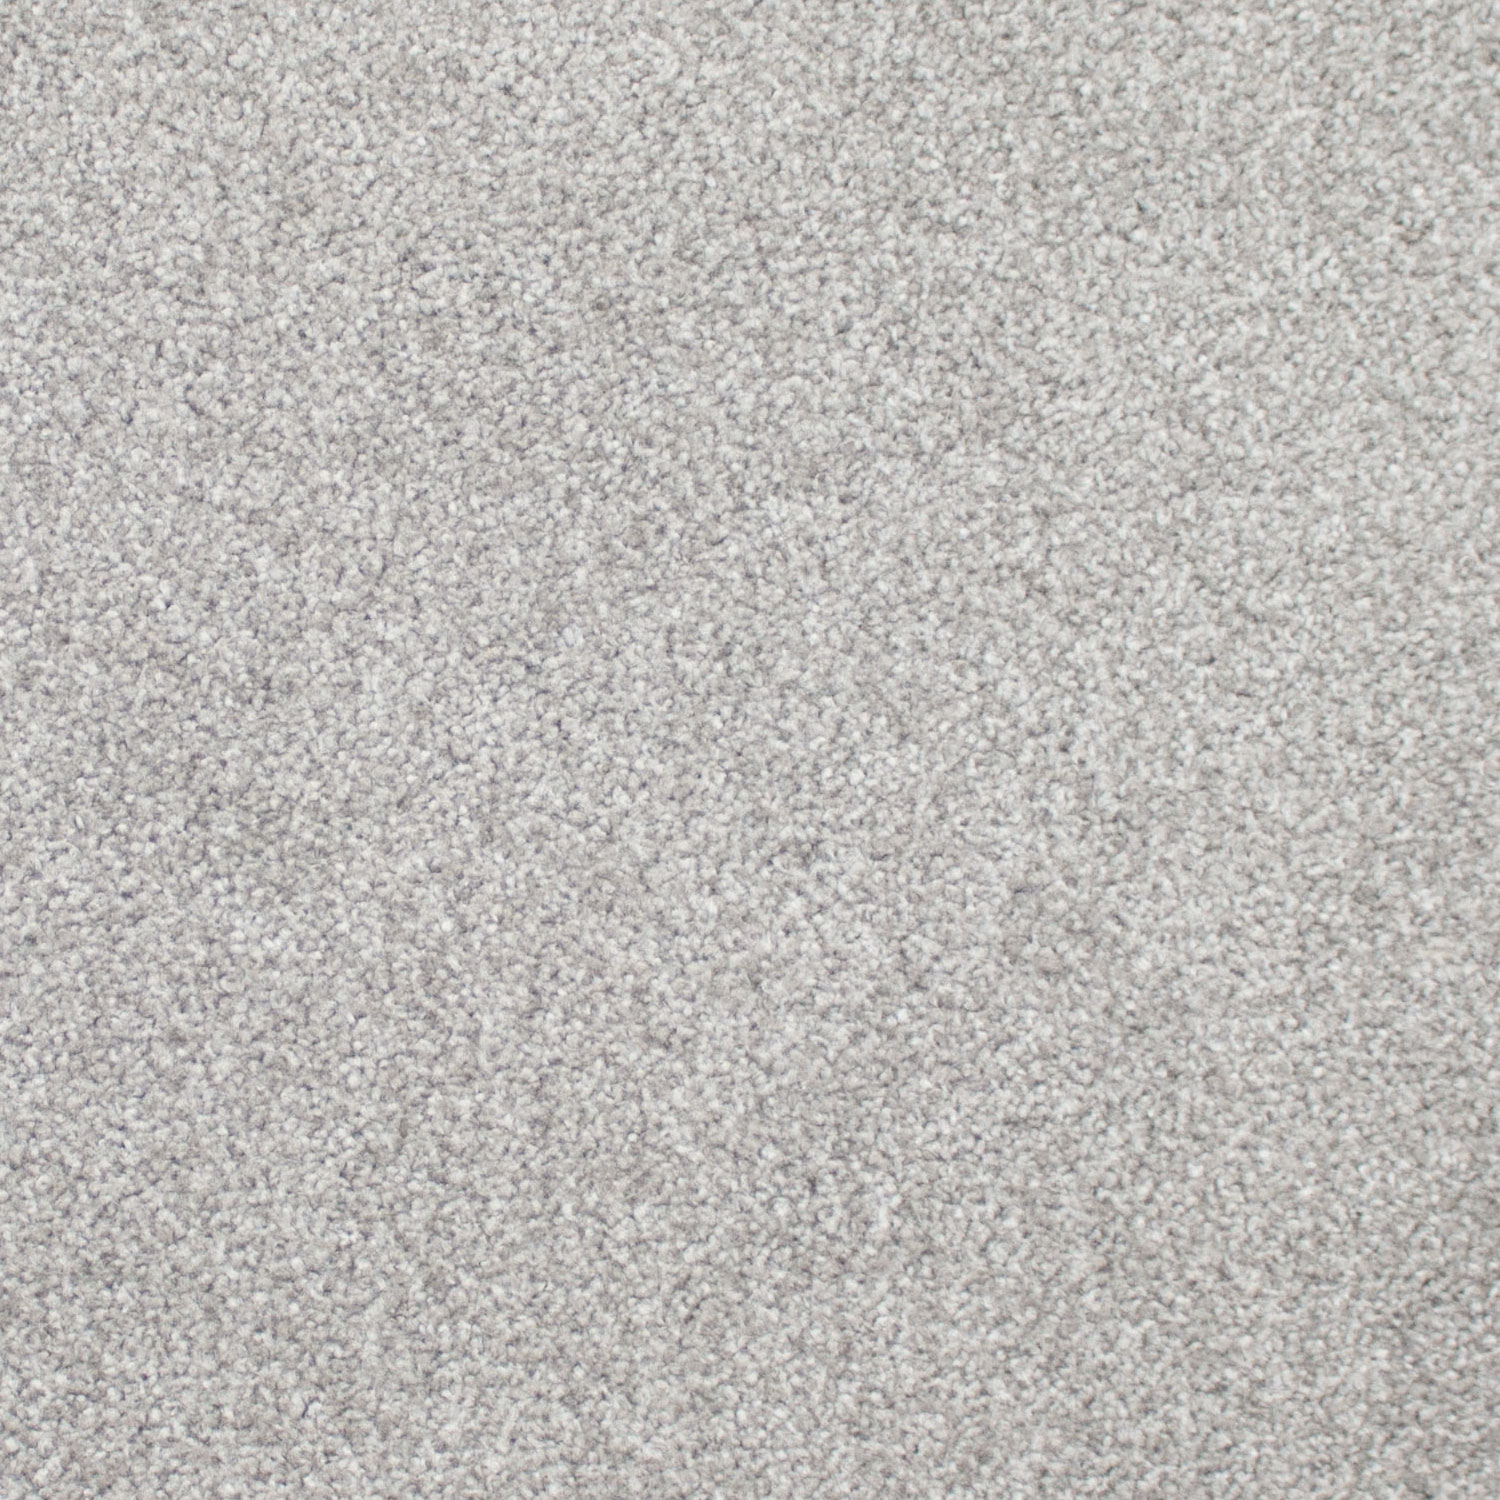 Rich Grey Malaga Saxony Carpet Actionback Hardwearing Stain Resistant 4m & 5m 